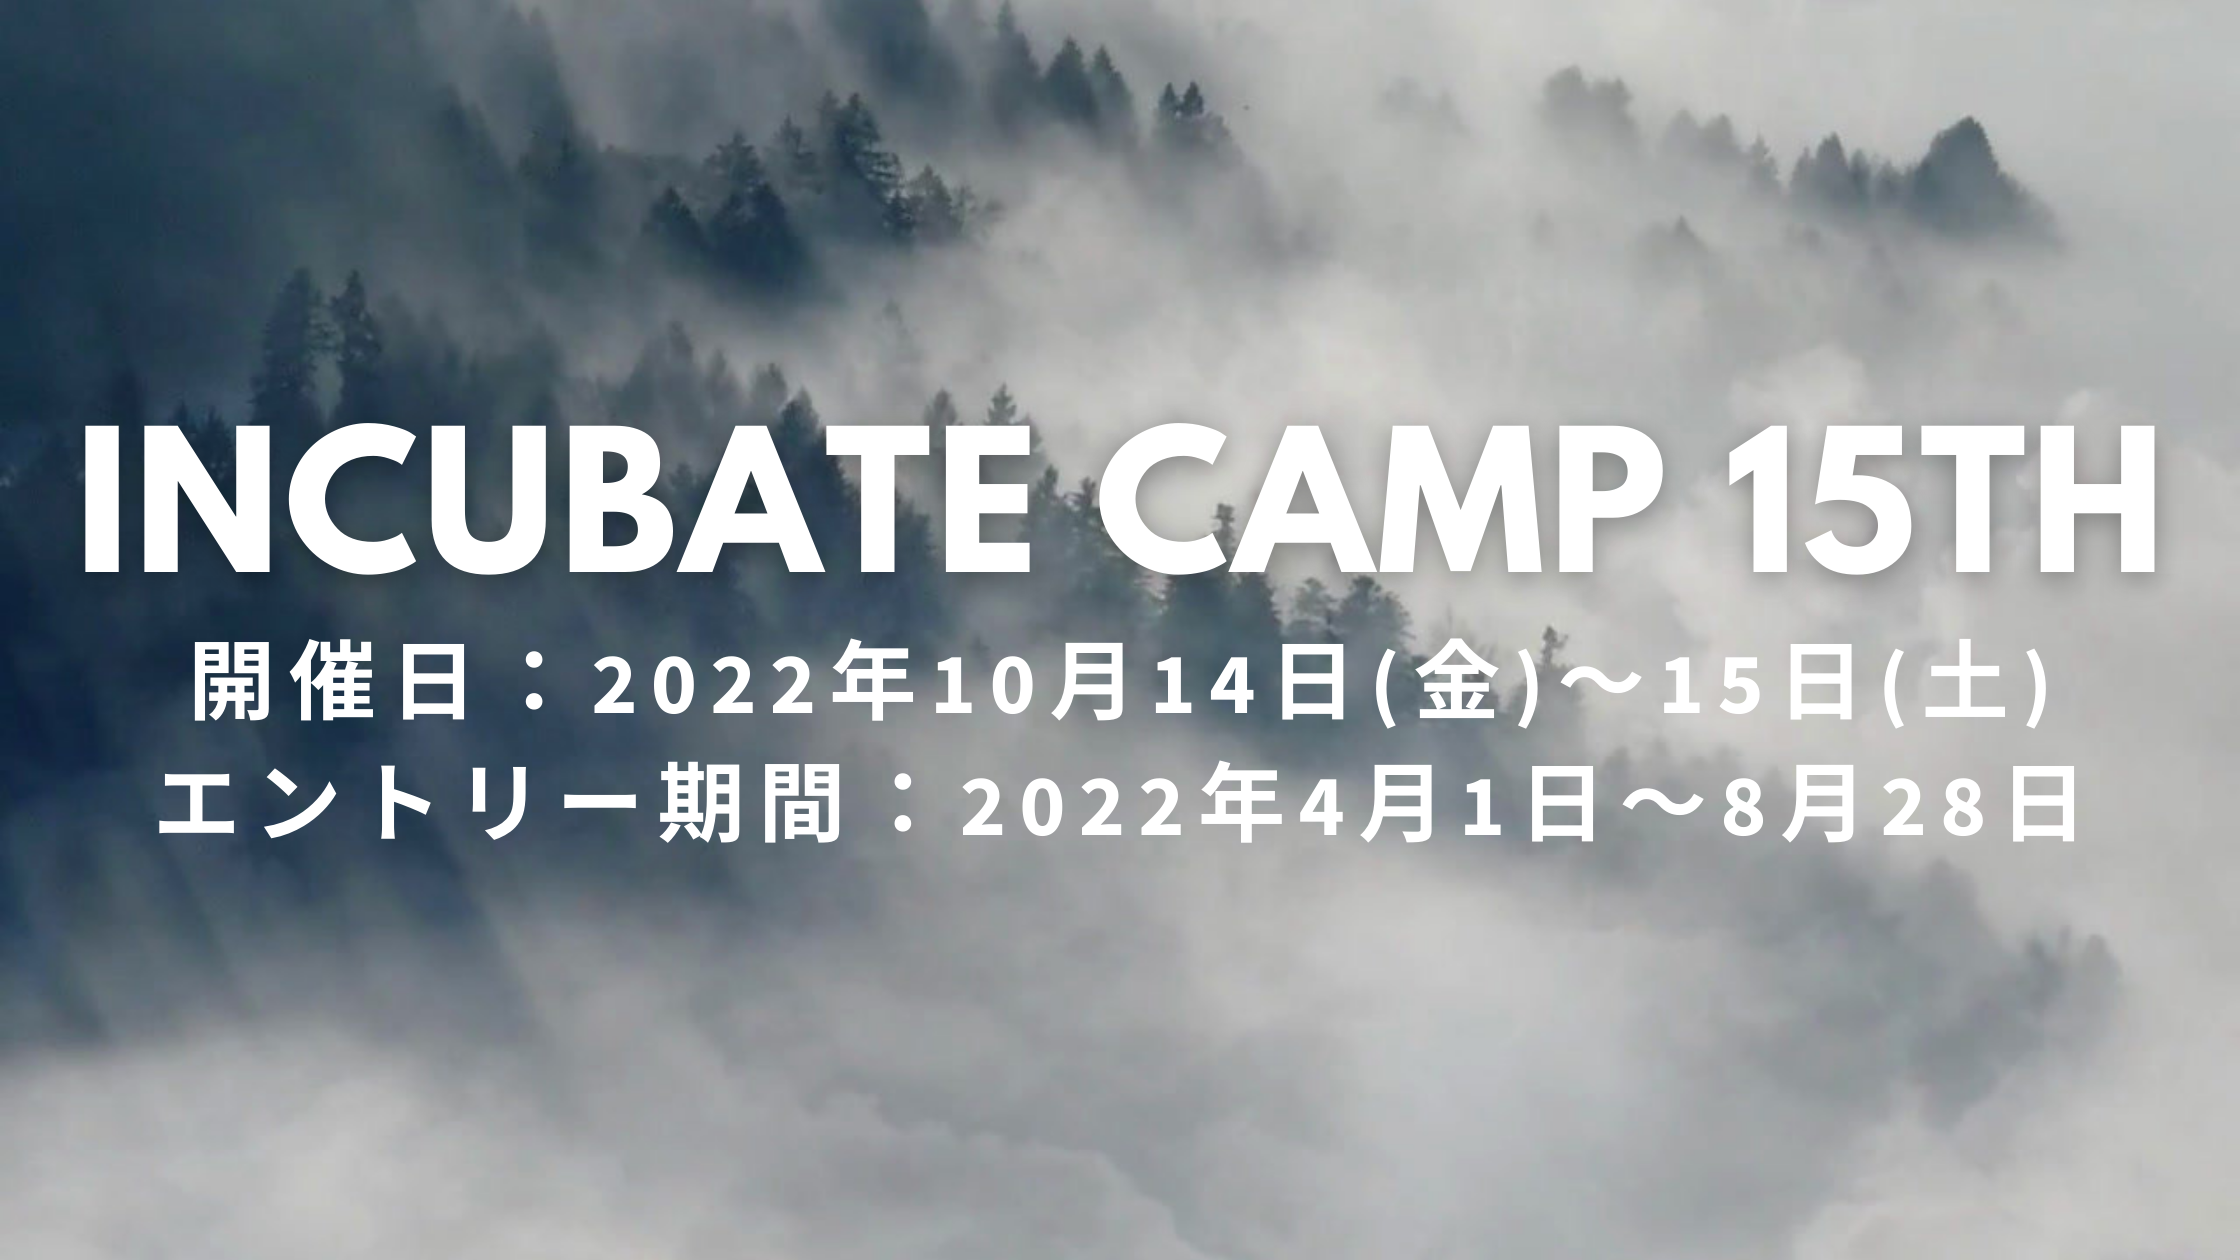 『Incubate Camp 15th』を2022年10月10月14日(金)-15日(土)に開催、本日4月1日(金)よりエントリー受付開始！